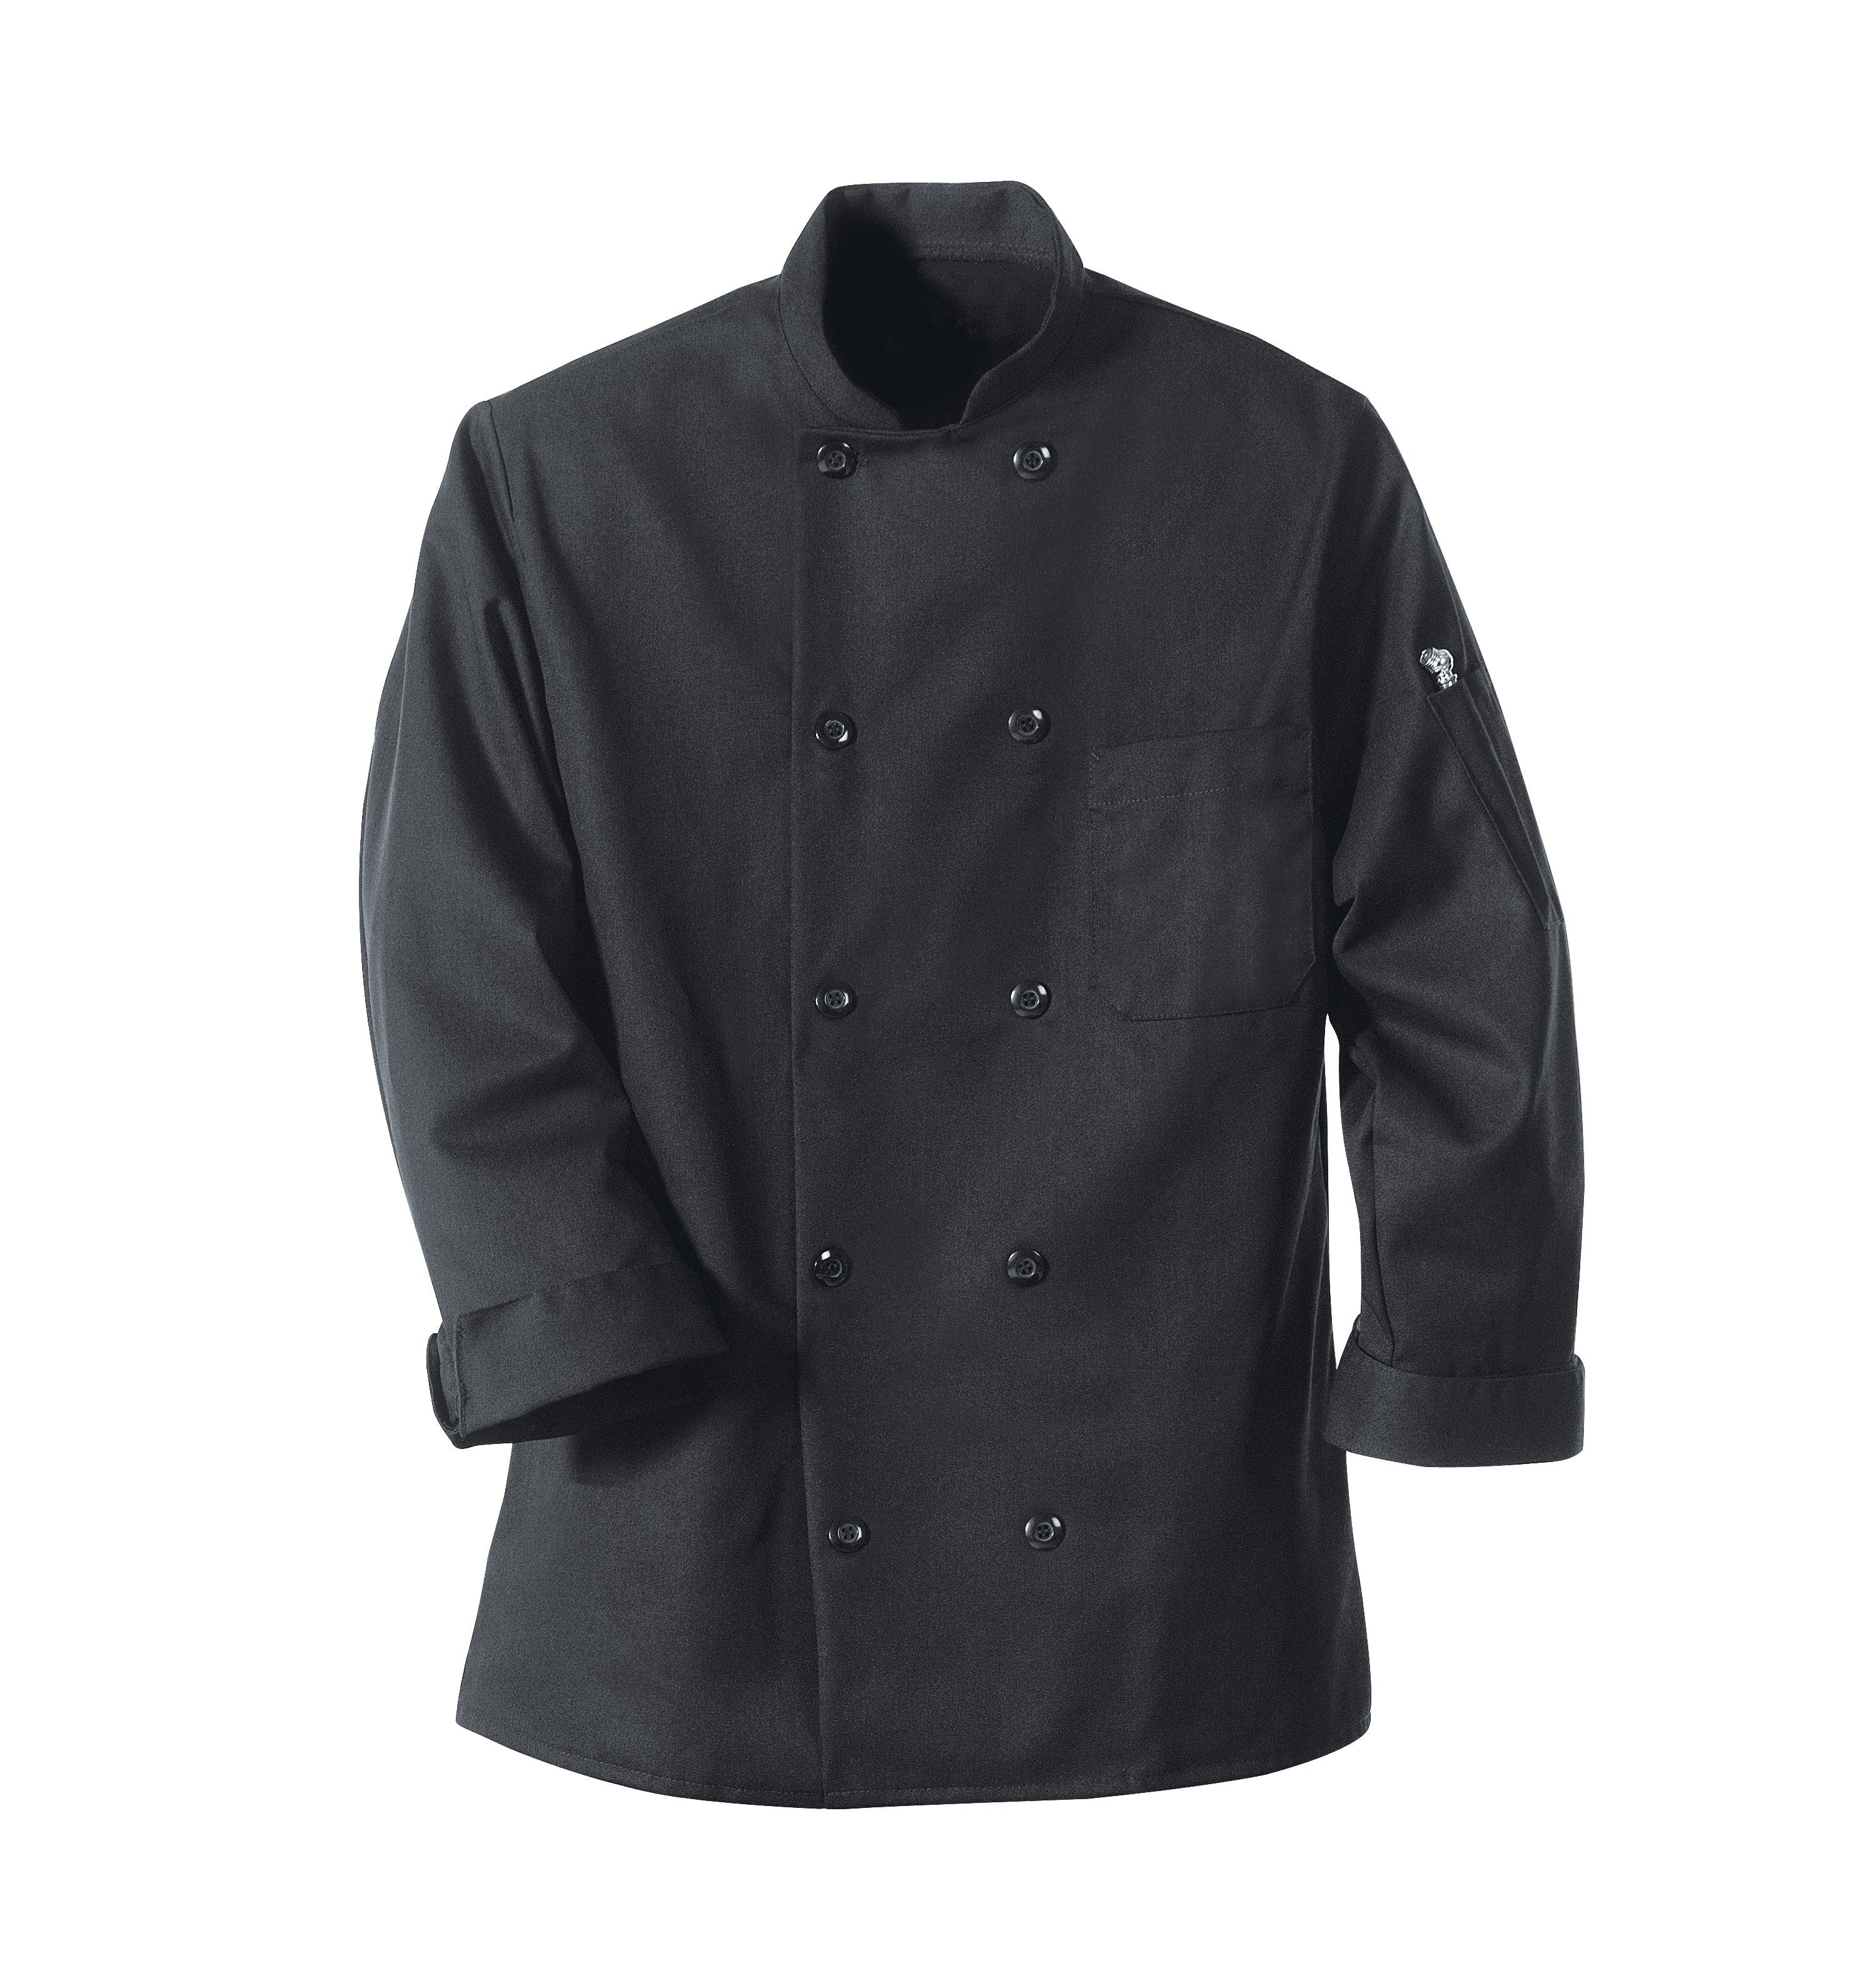 Black Chef Coat Ten Pearl Buttons 0425 - Black